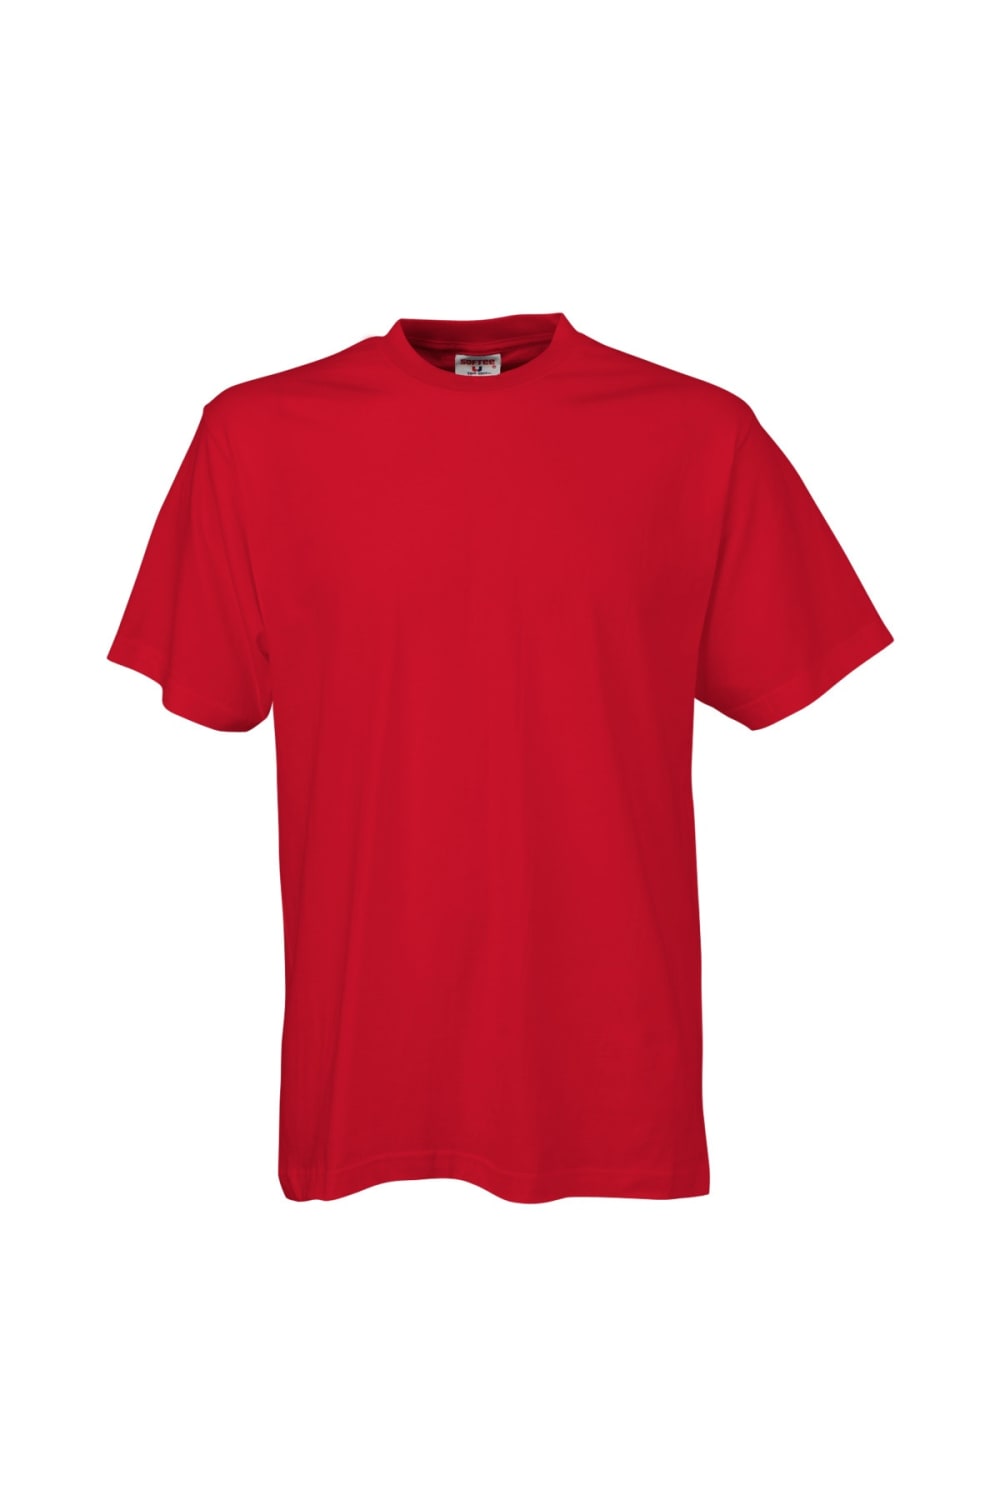 Mens Short Sleeve T-Shirt - Red